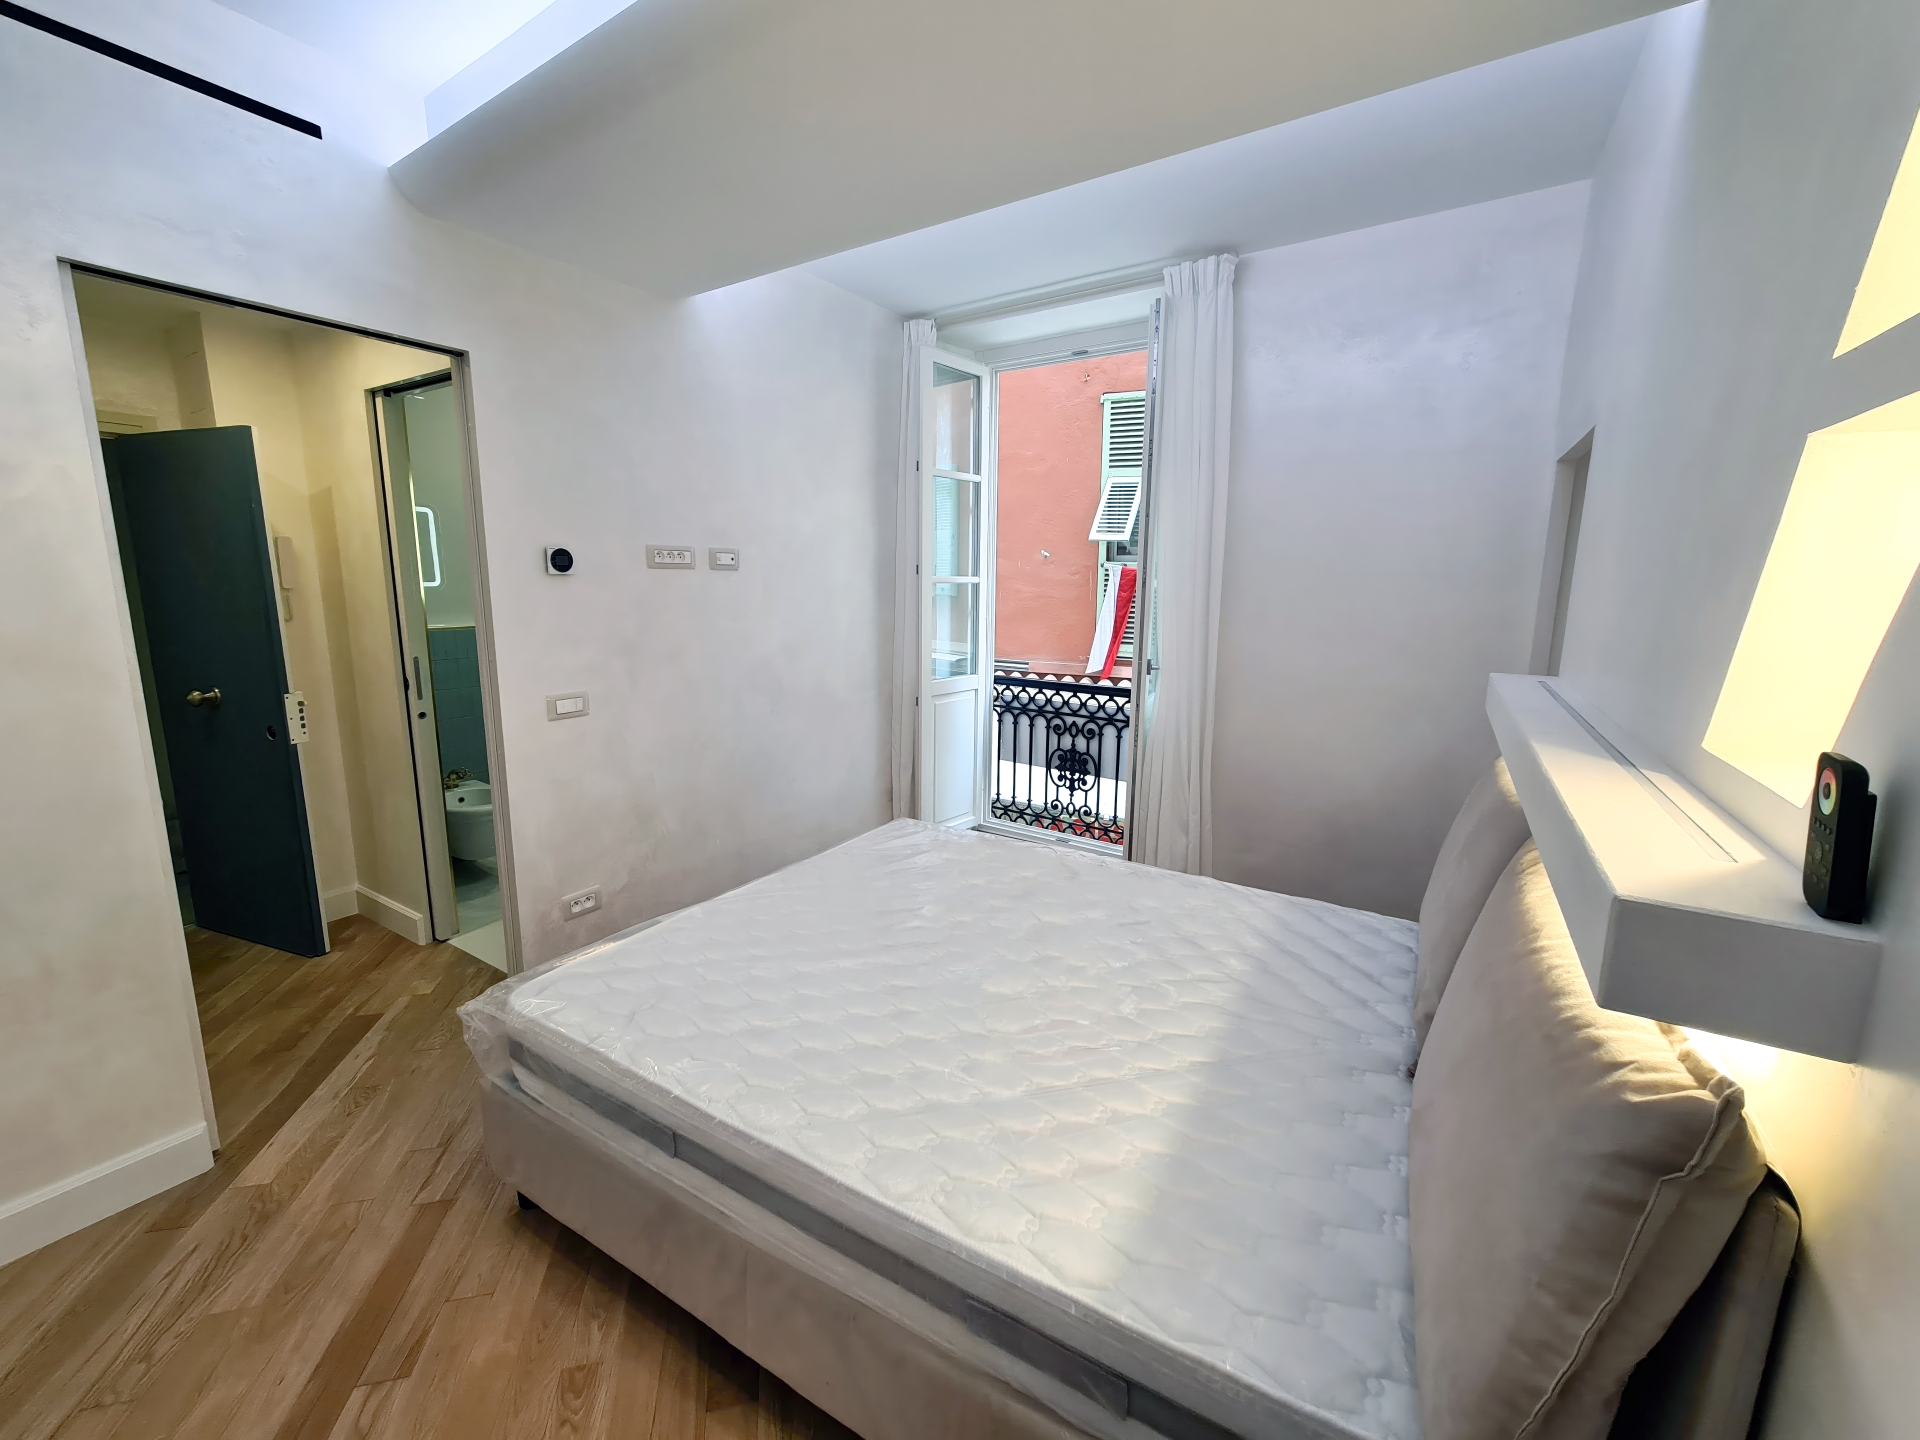 Dotta Appartement de 4 pieces a vendre - 32 rue Felix Gastaldi - Monaco-Ville - Monaco - img7